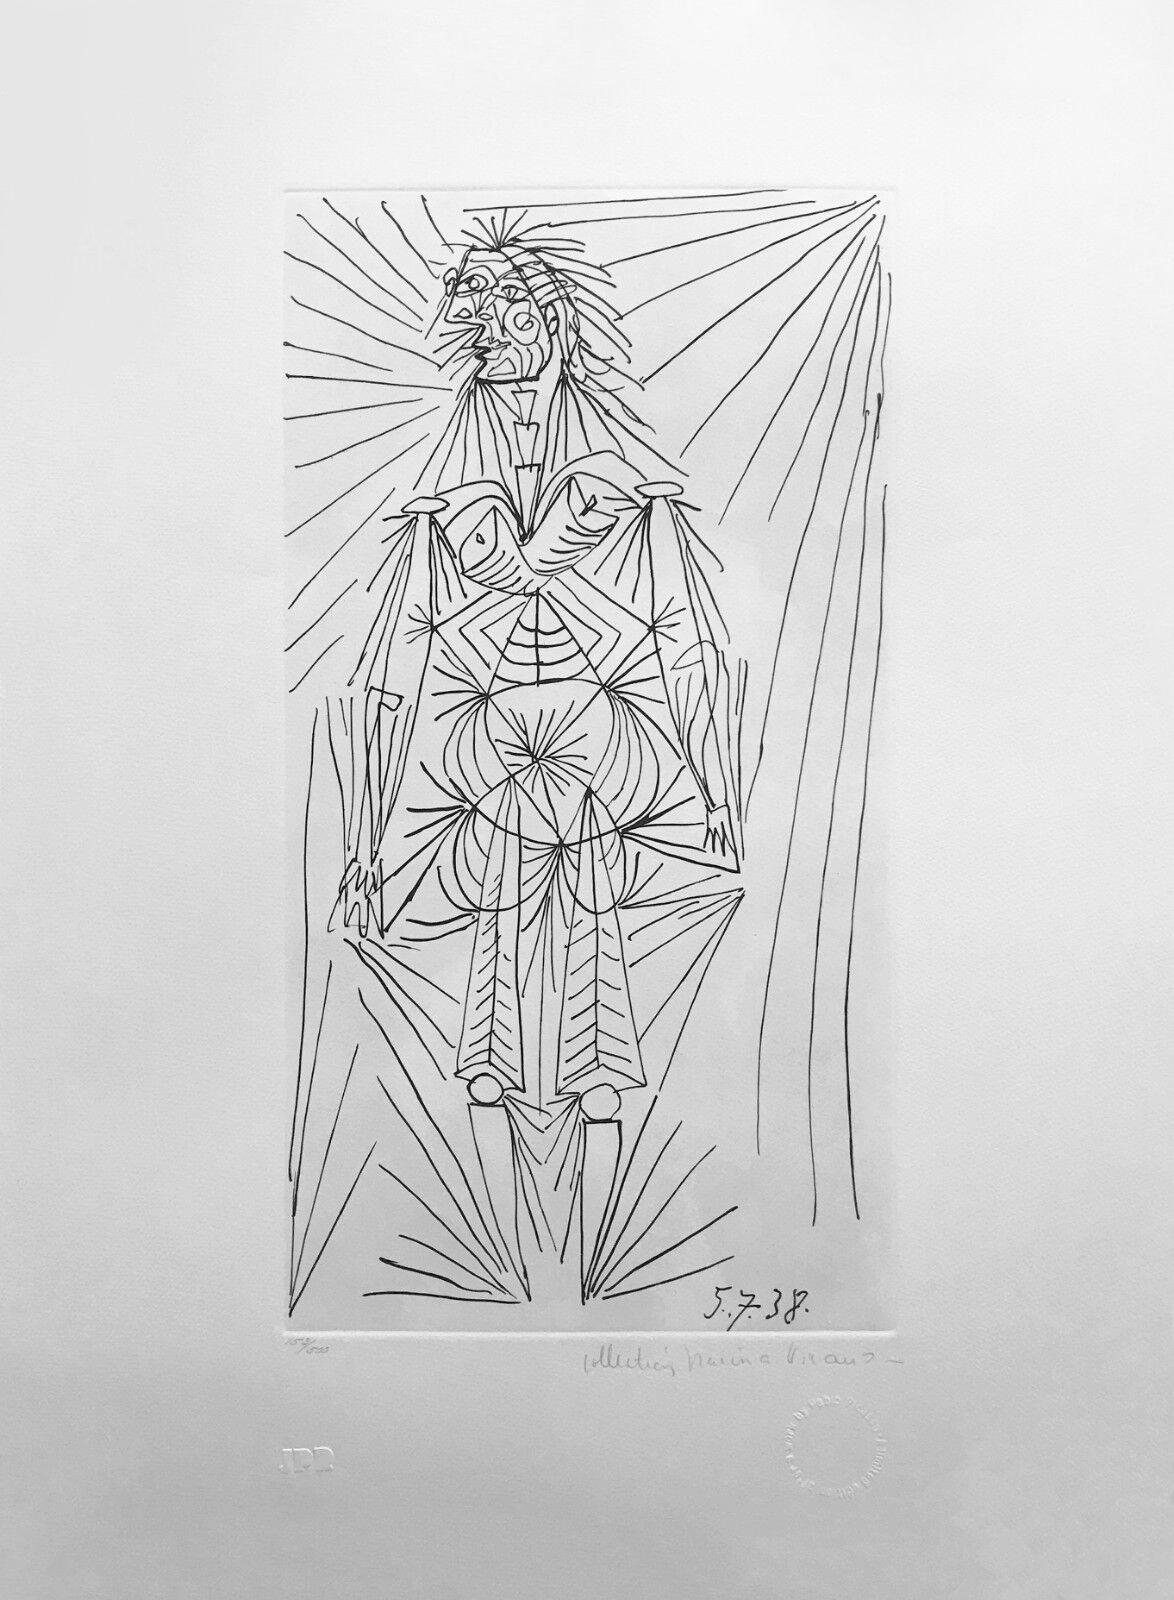 (after) Pablo Picasso Figurative Print - FEMME DEBOUT